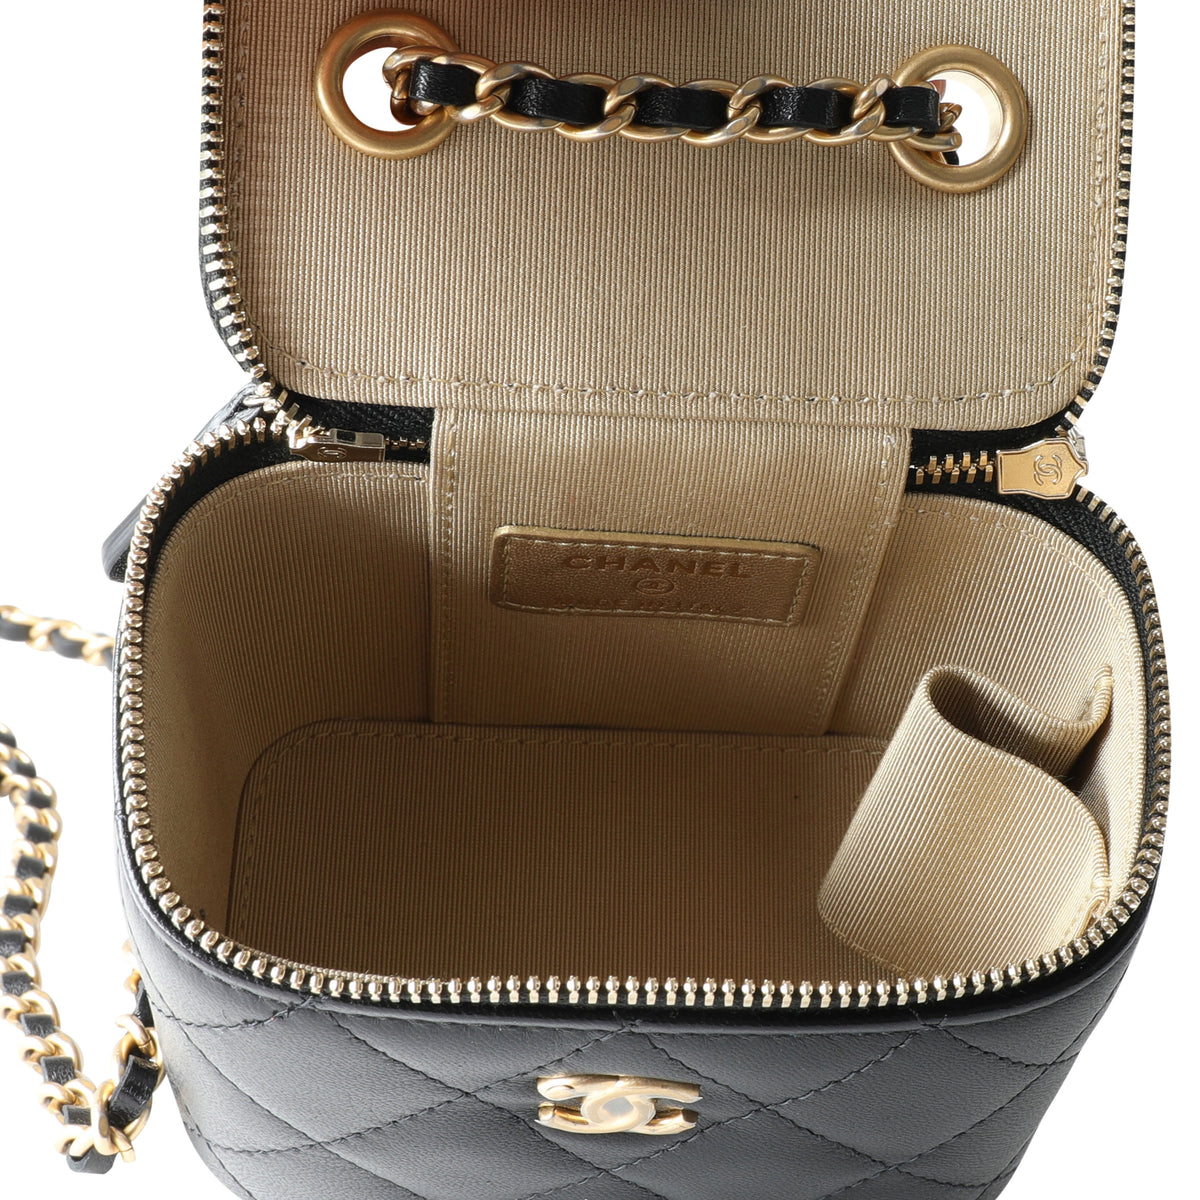 Chanel Clutch Handbag -  India